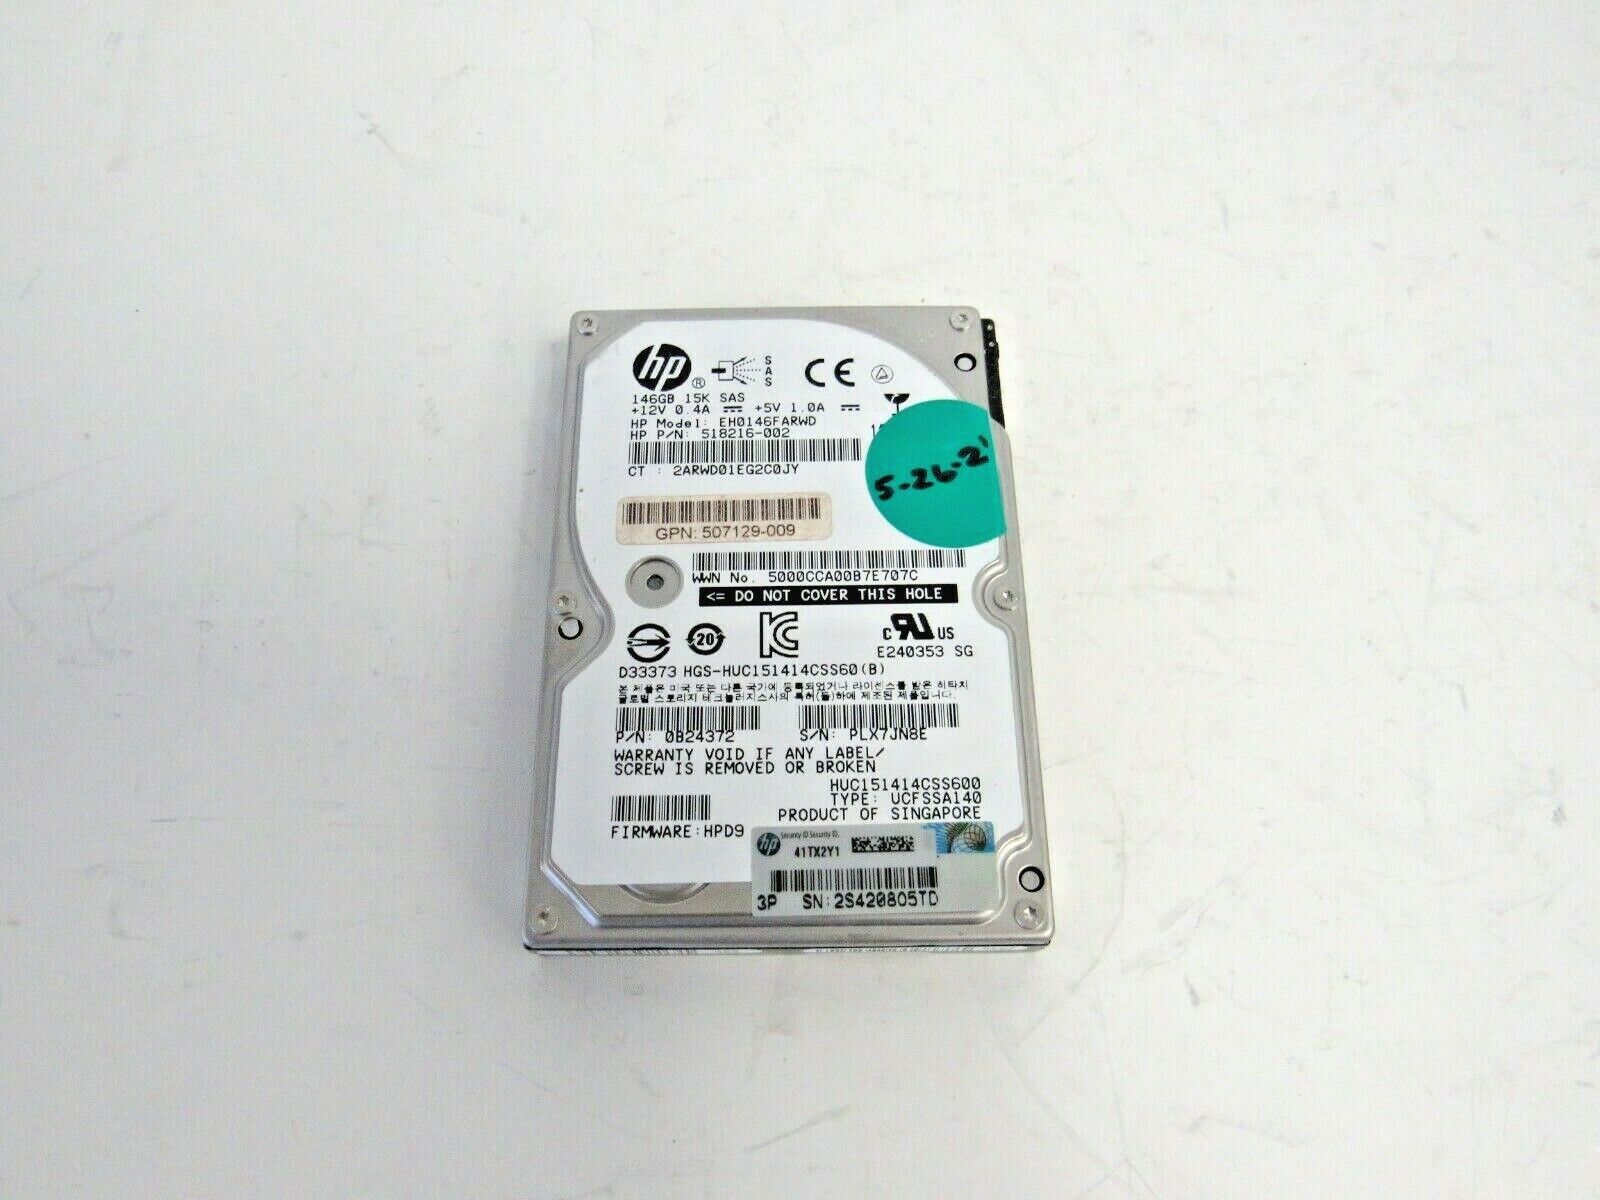 HP 518216-002 Hitachi 0B24372 Ultrastar 146GB 15000RPM SAS2 64MB 2.5